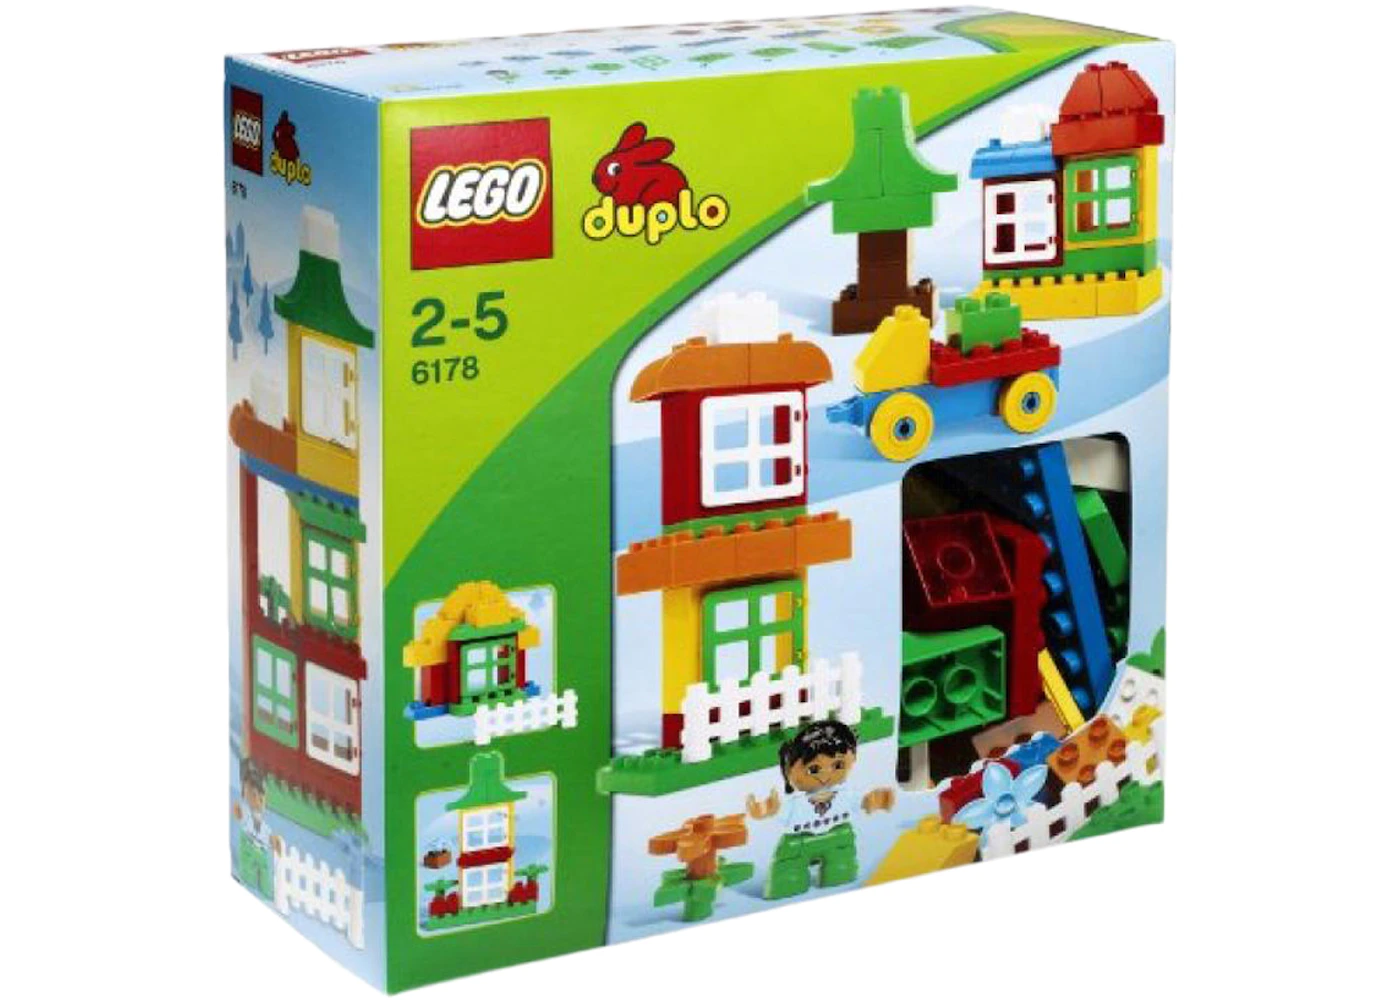 lego-duplo-my-lego-duplo-town-set-6178-fw20-gb